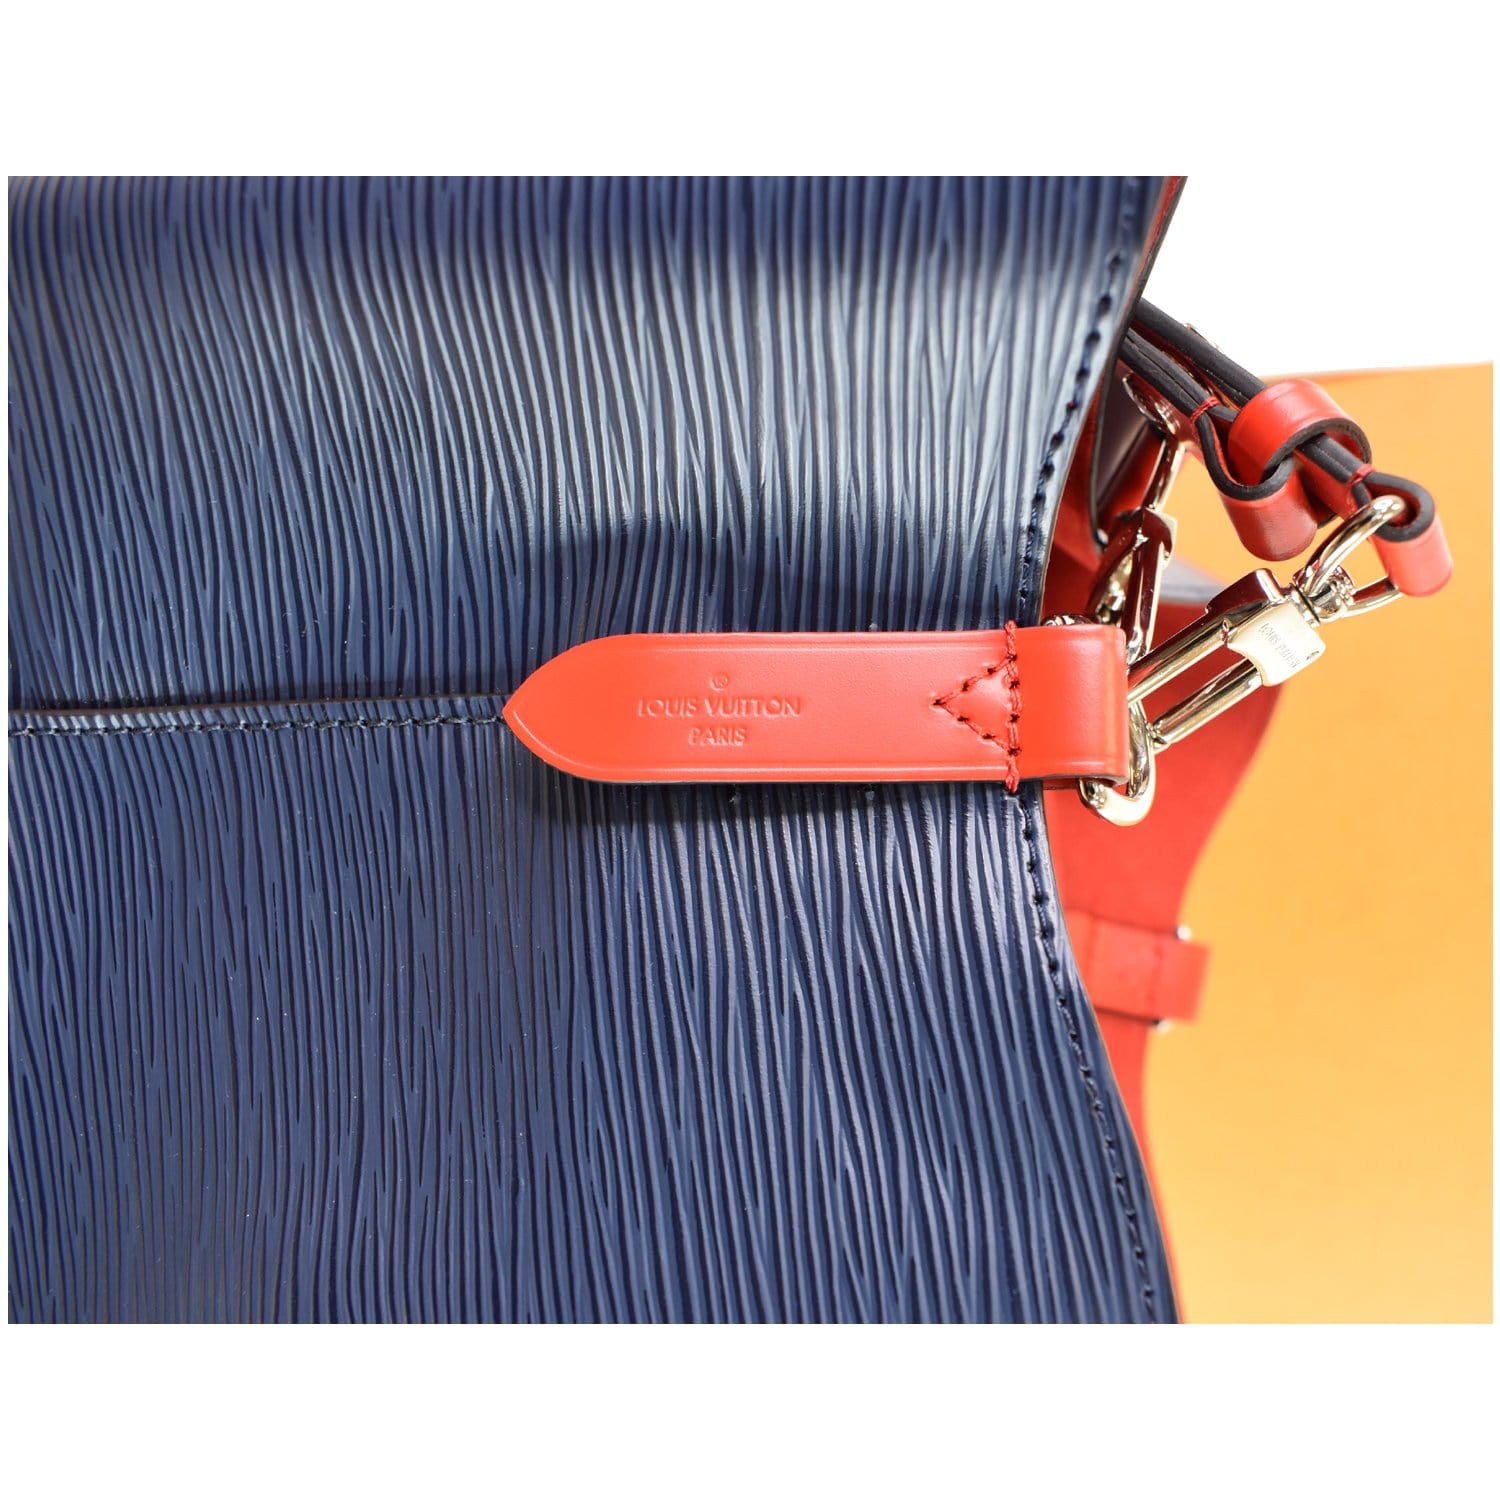 Louis Vuitton Epi Neonoe Handbag Shoulder Bag M54365 Wine Red Navy Leather  Women's LOUIS VUITTON | eLADY Globazone